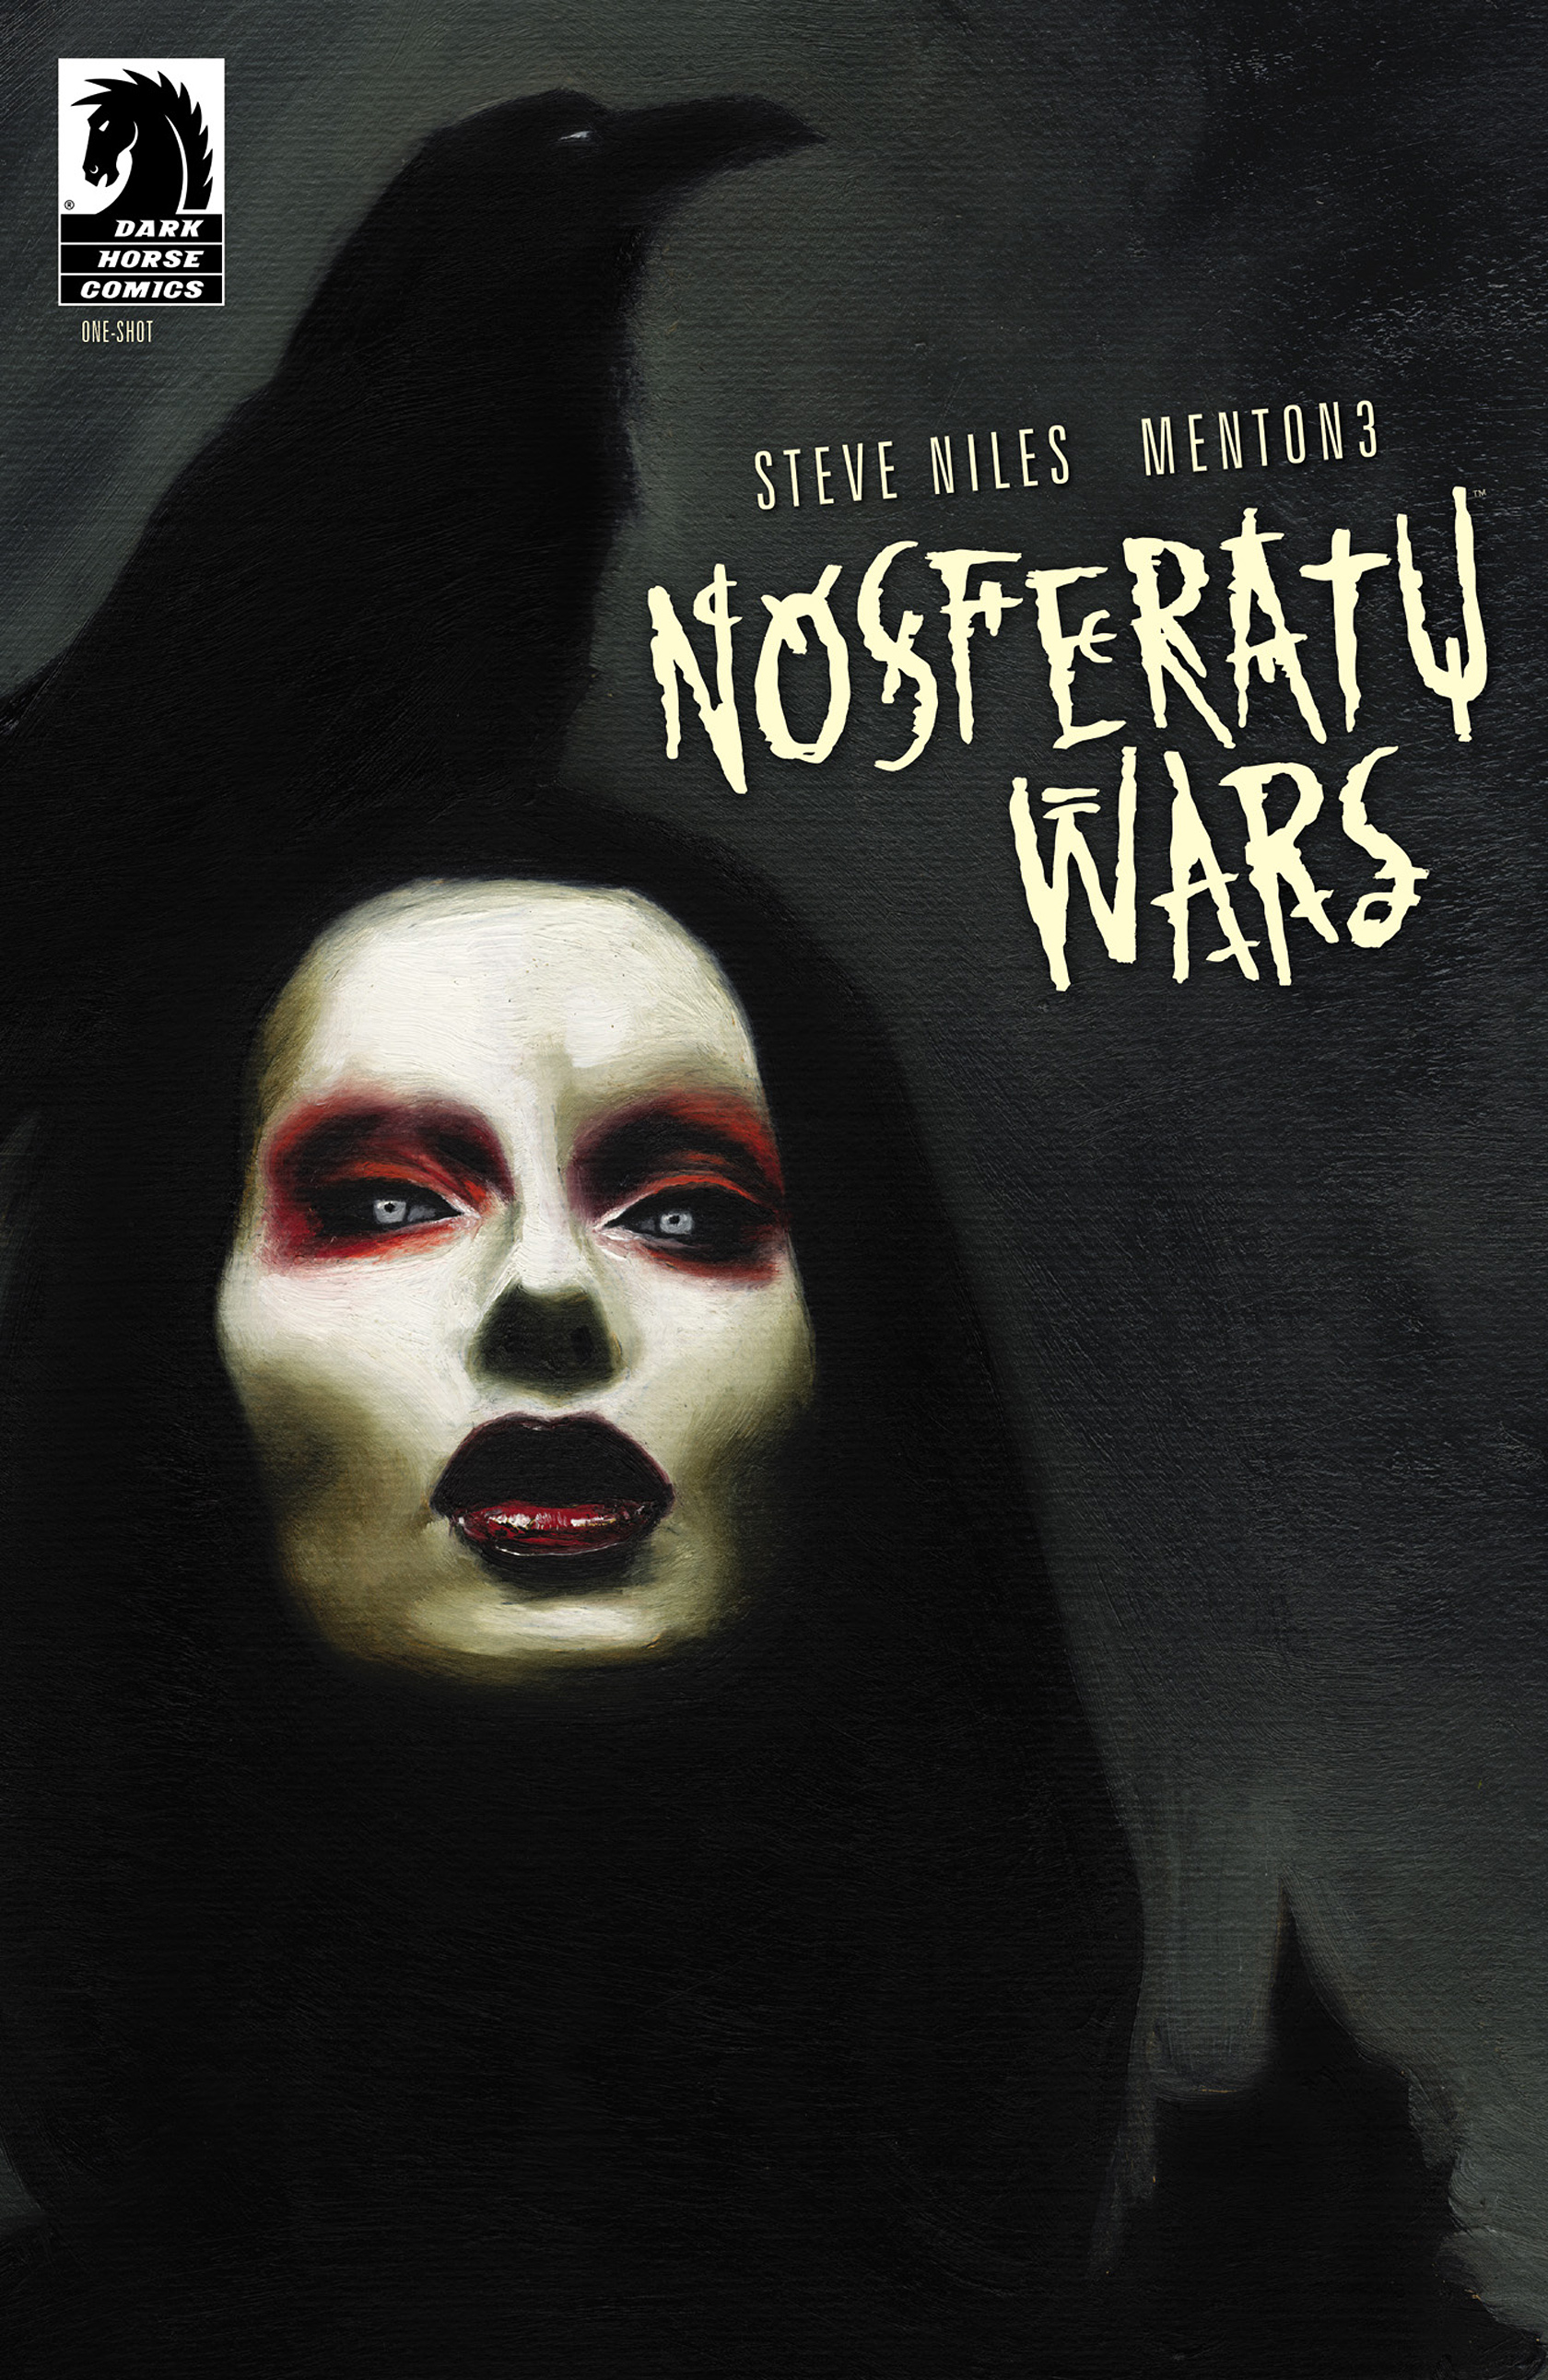 Read online Nosferatu Wars comic -  Issue # Full - 1